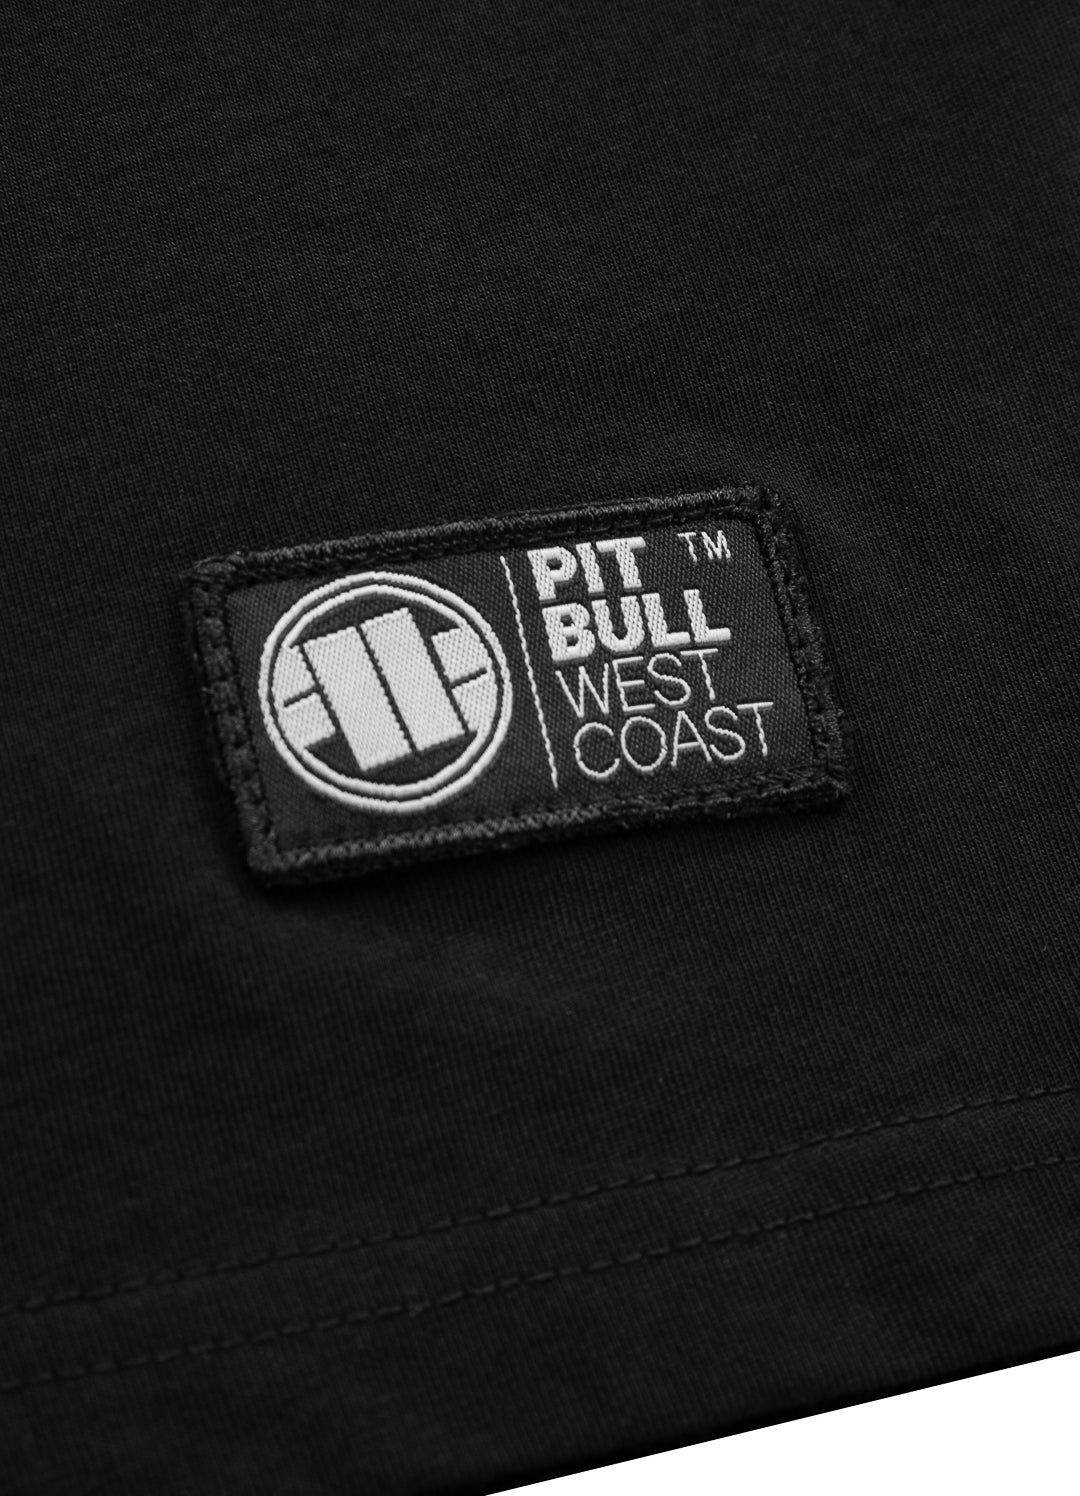 Tank Top Slim Fit HILLTOP Black - Pitbull West Coast International Store 